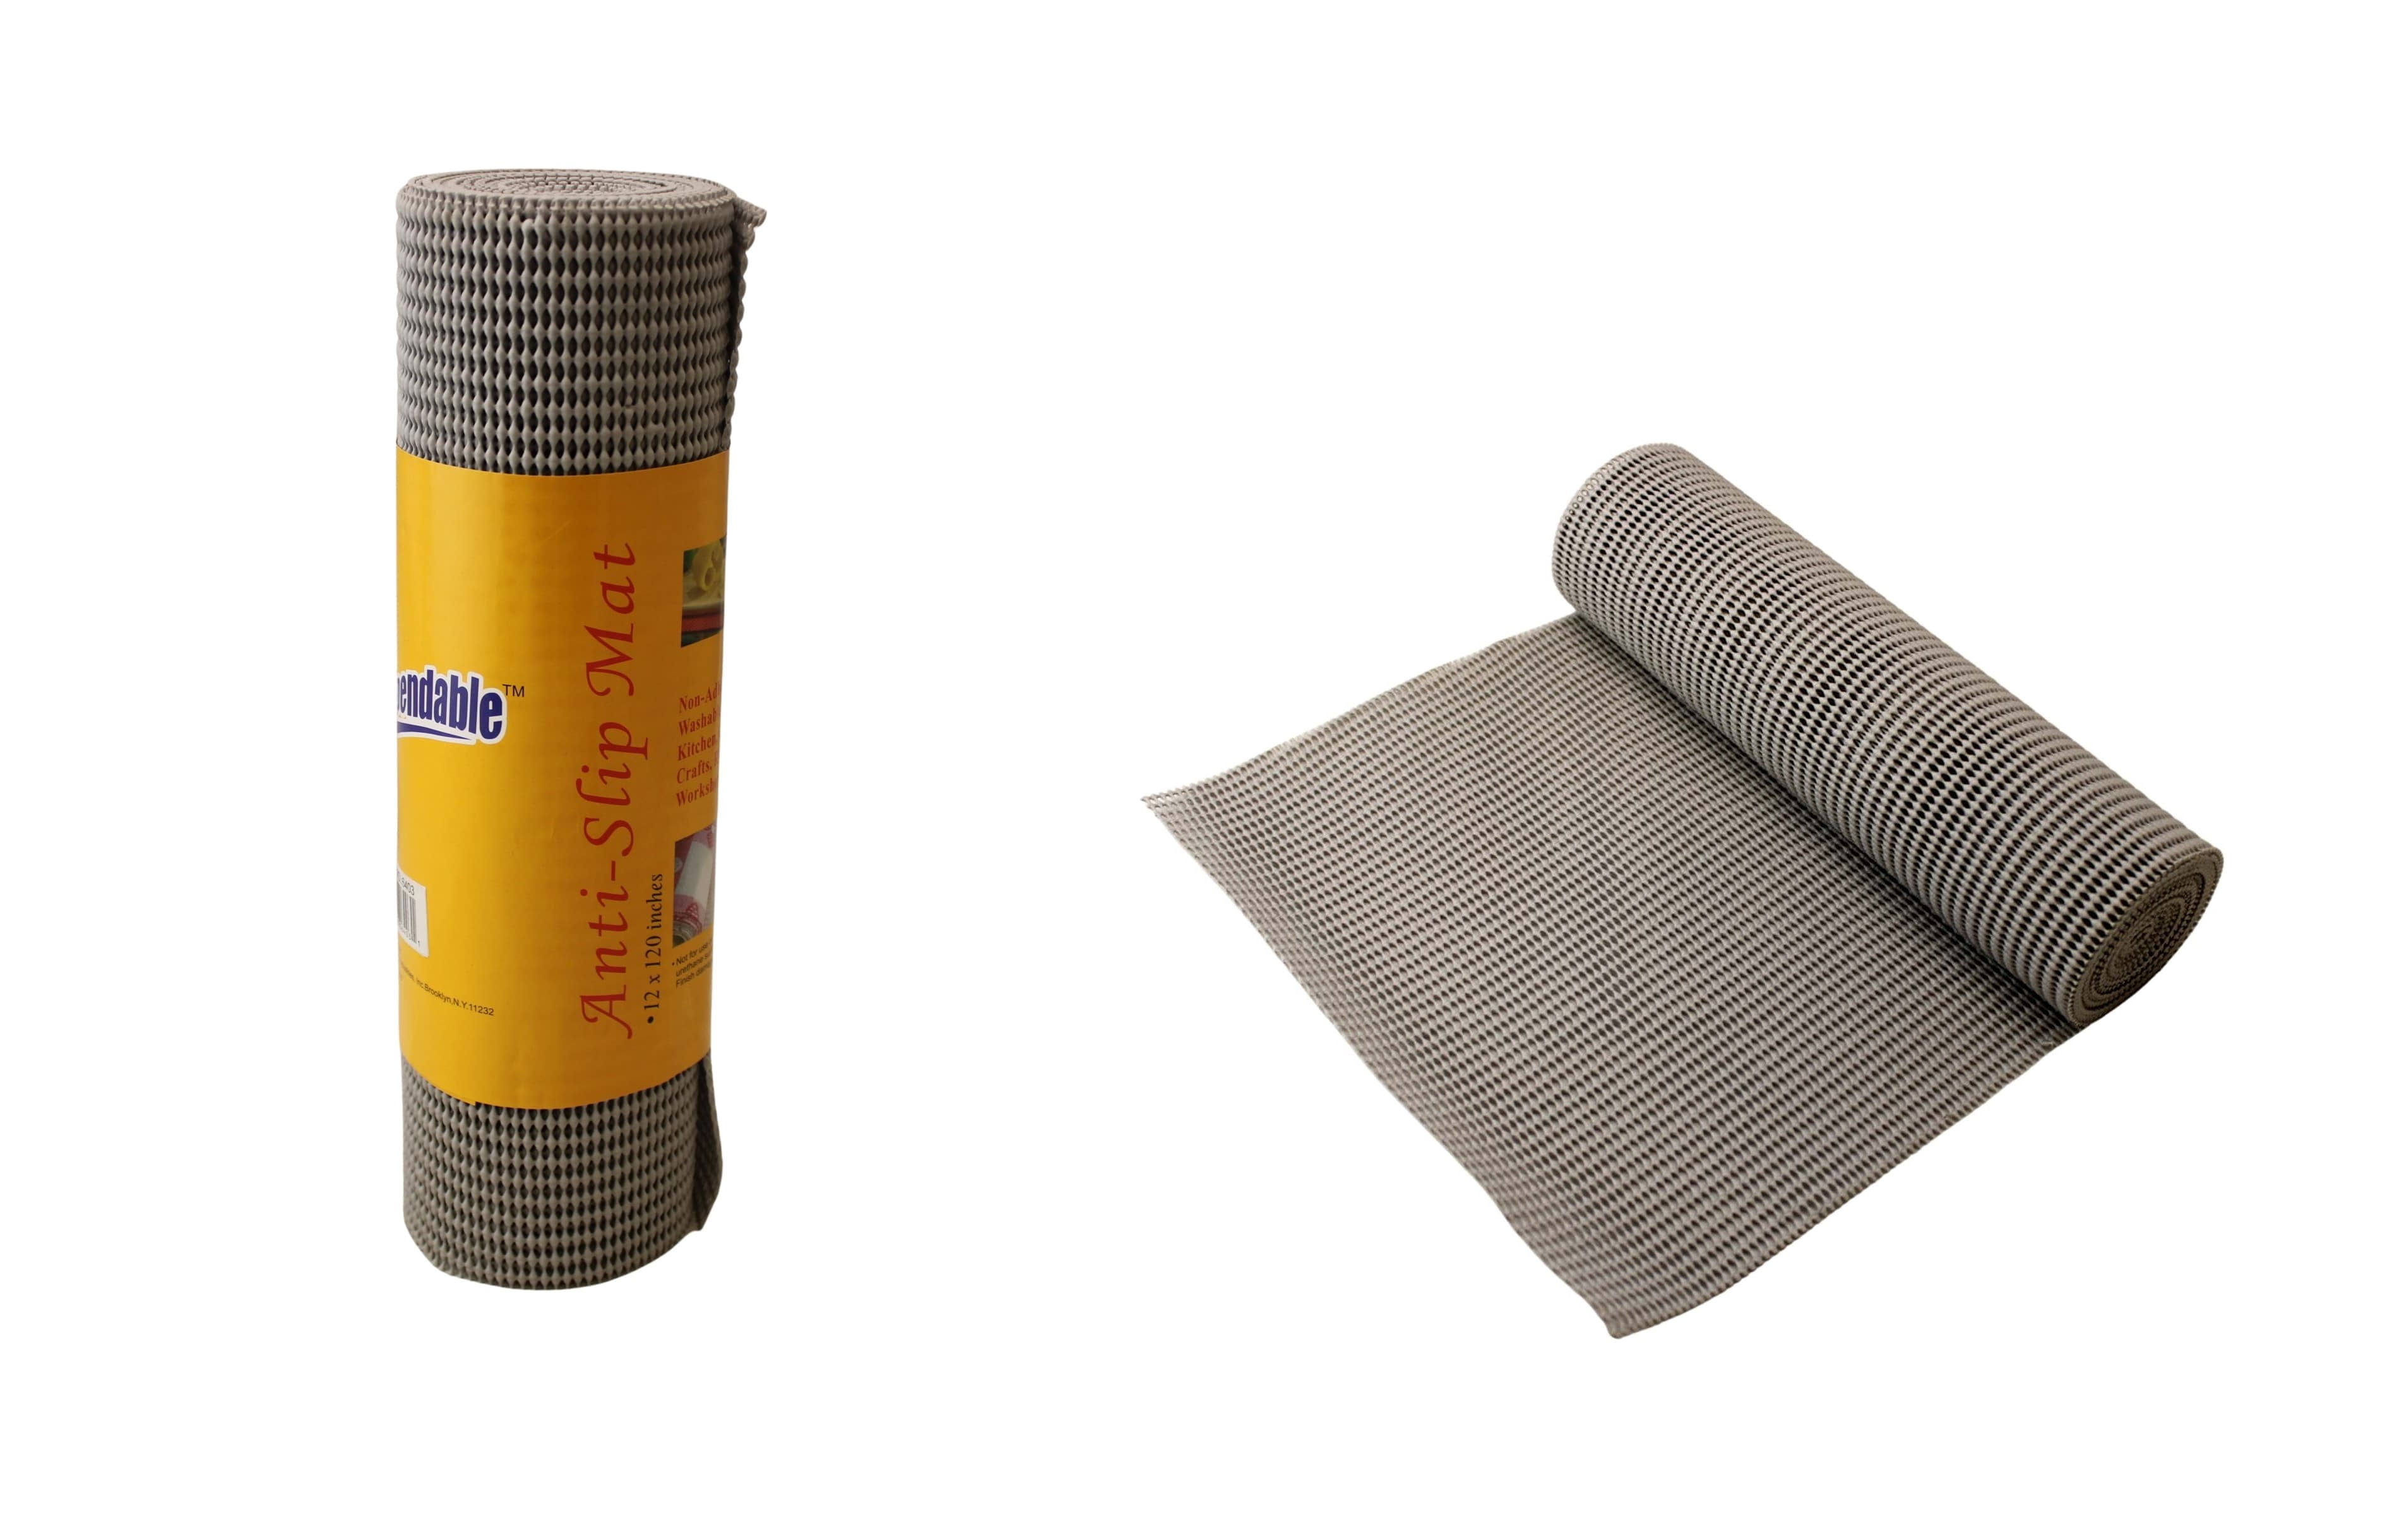 Plast-O-Mat Ribbed Floor Runner Carpet Protector,No PM-50 Warp Brothers 